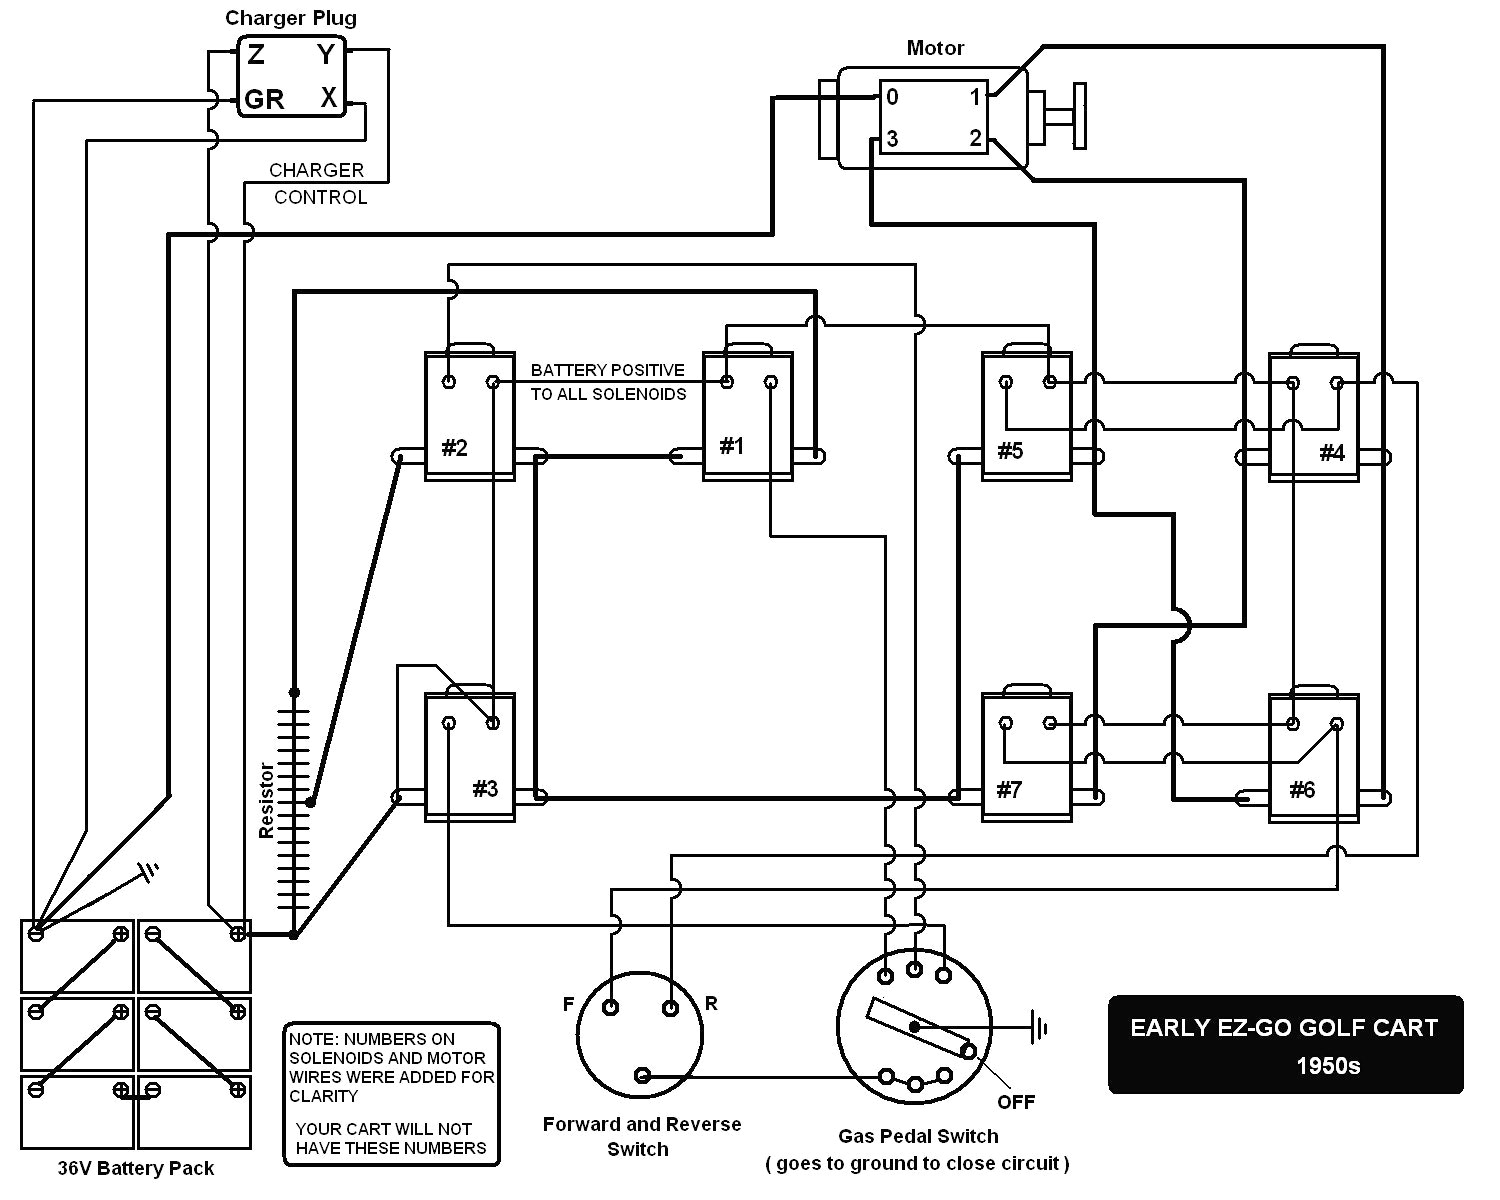 club car forward reverse switch wiring diagram inspirational wiring diagram od rv park jmcdonaldfo wiring diagram collection of club car forward reverse switch wiring diagram jpg